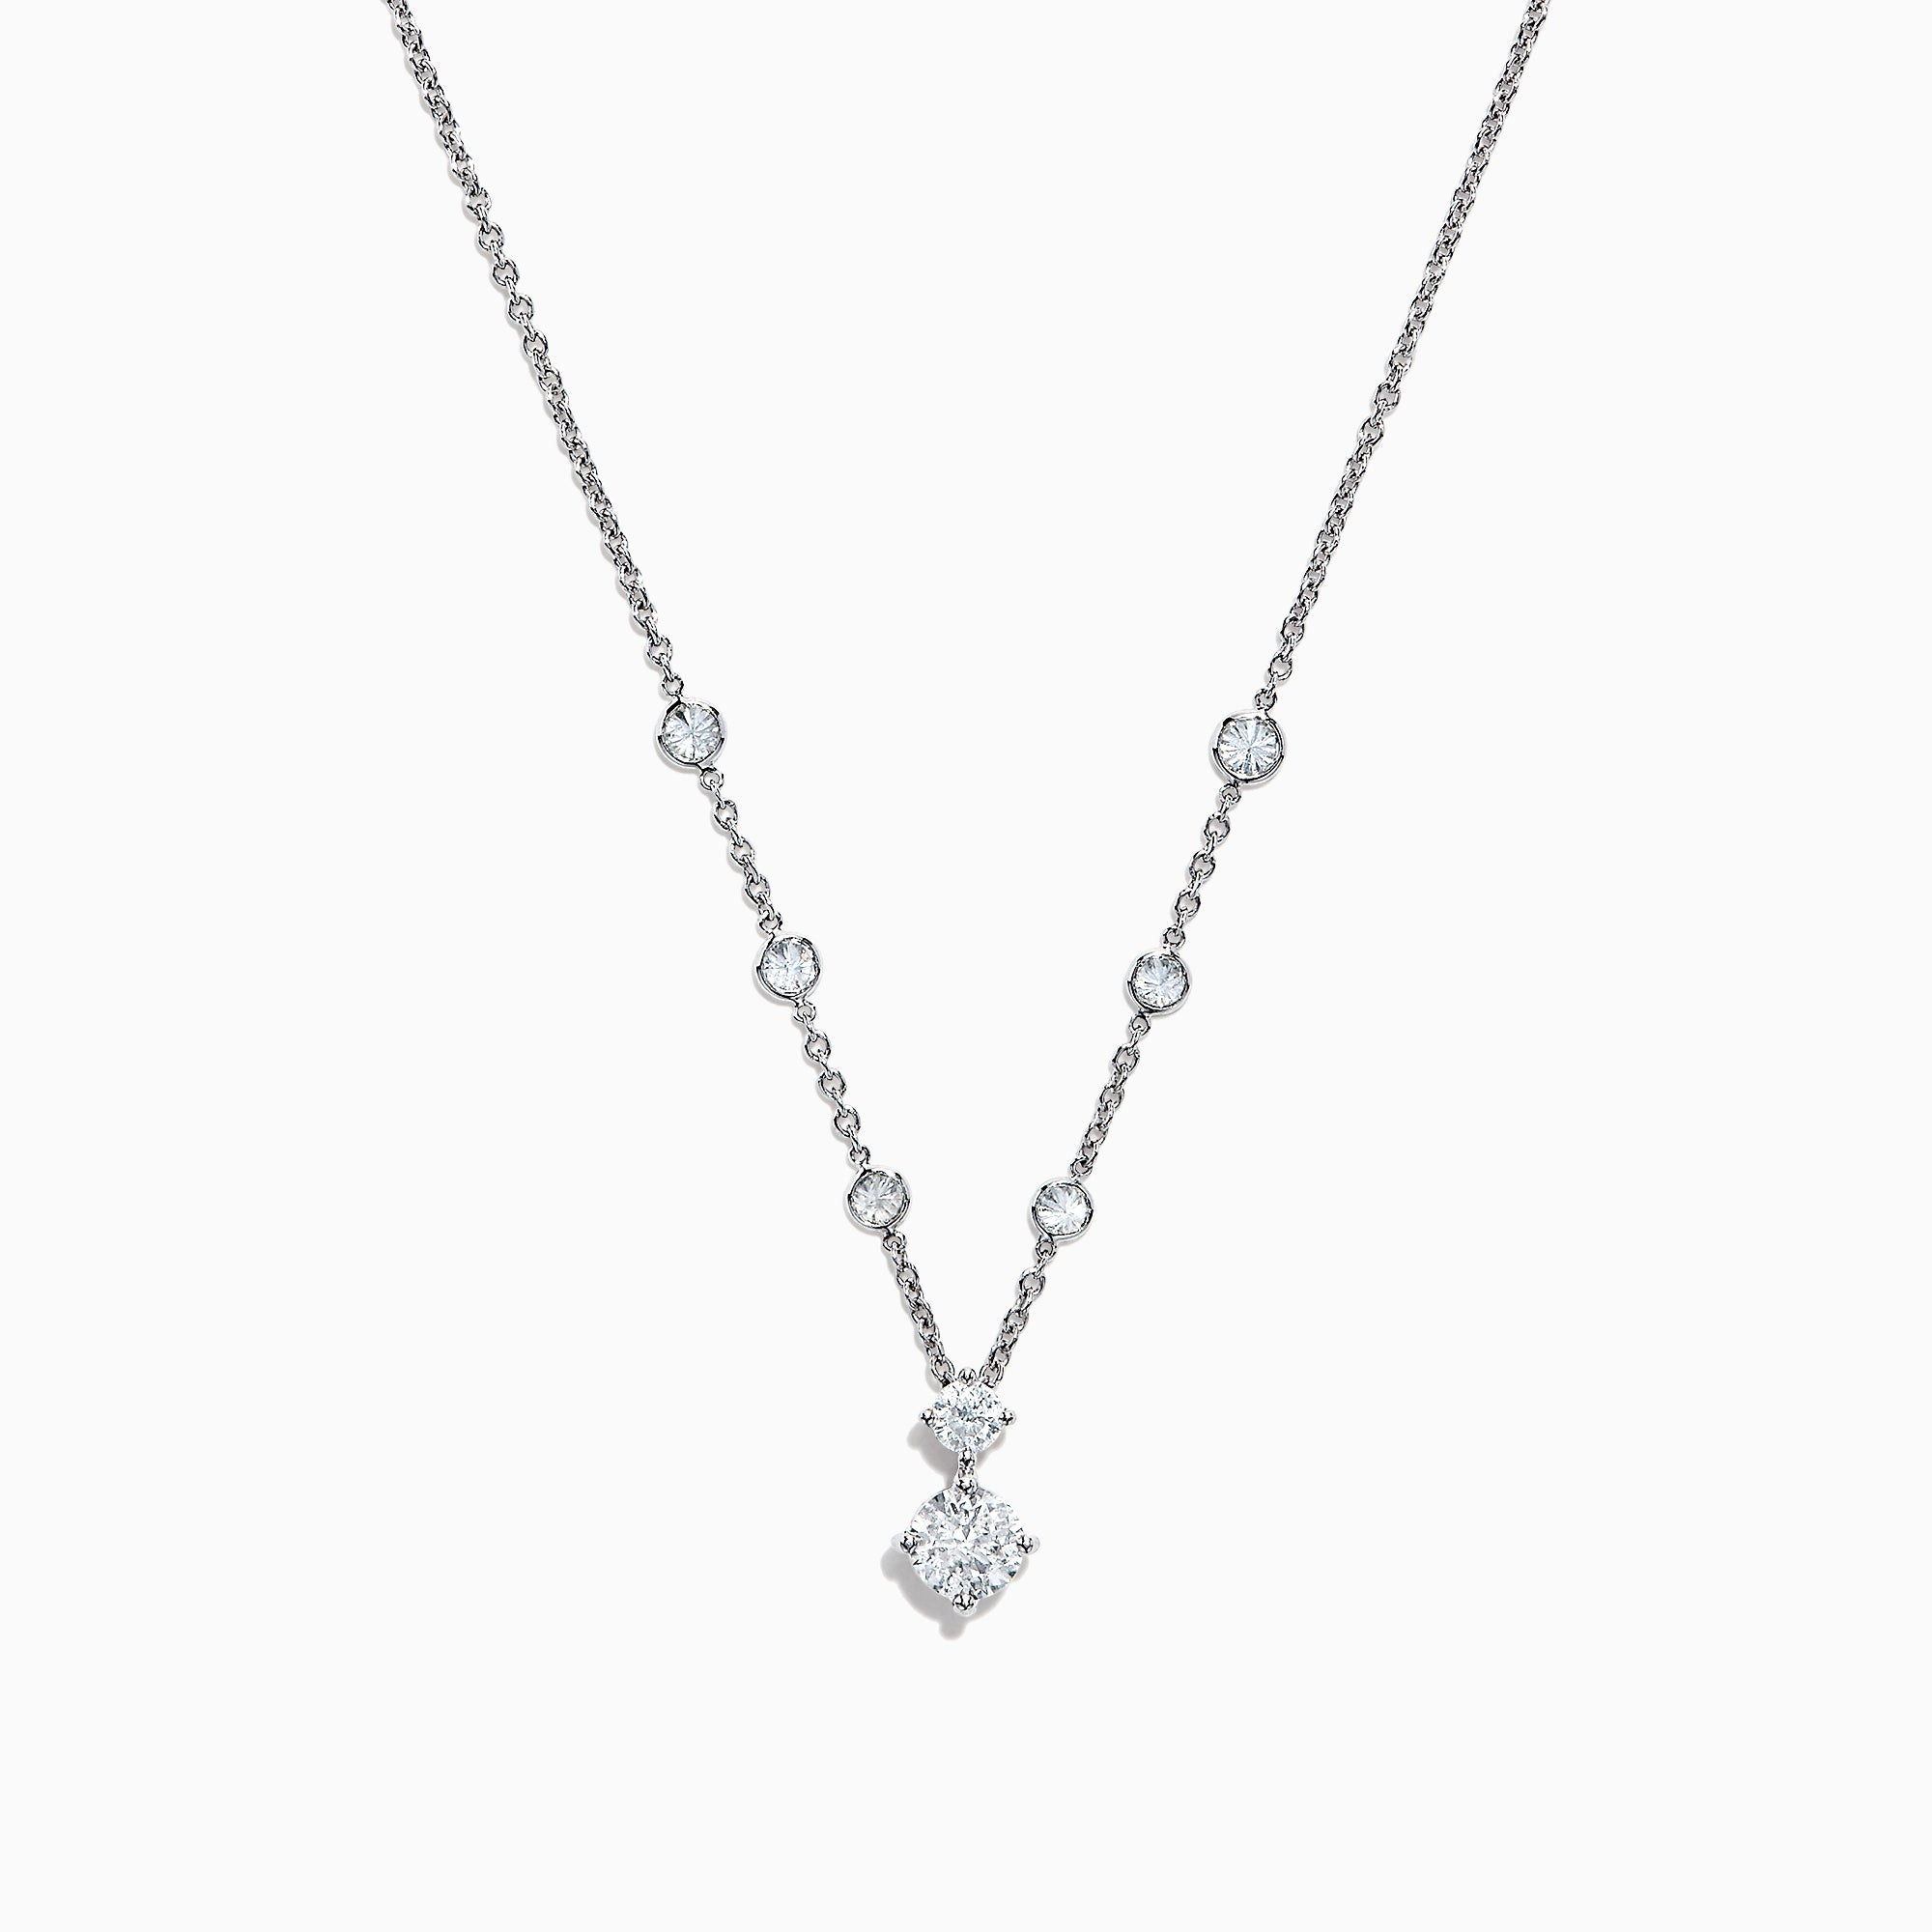 Effy Pave Classica 14K White Gold Diamond Necklace, 0.91 TCW